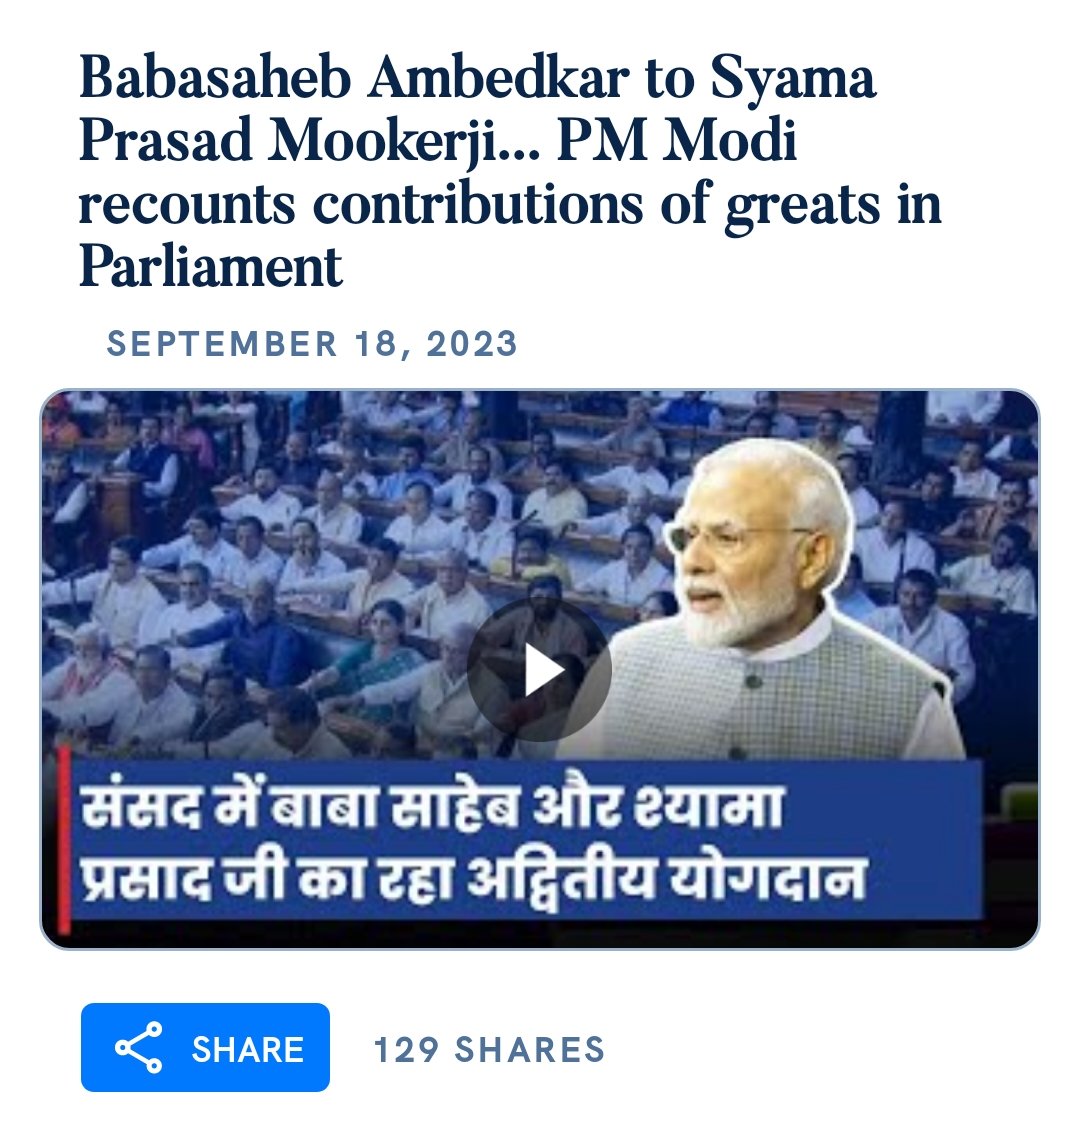 #BabasahebAmbedkar to #SyamaPrasadMookerji... PM #Modi recounts contributions of greats in Parliament
youtube.com/watch?v=gsvZG5…